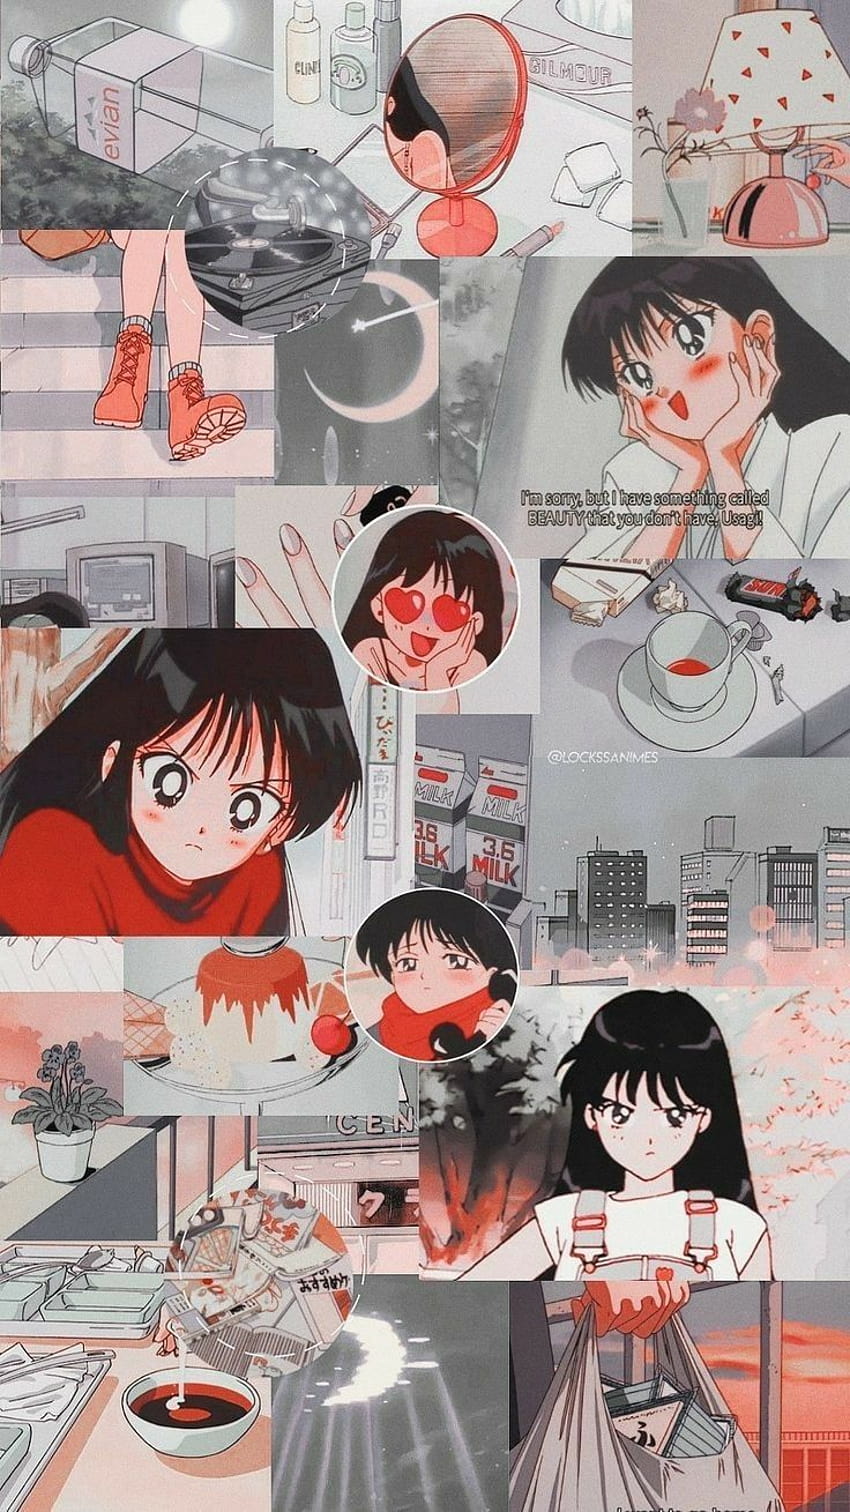 List of Good Looking Retro Anime IPhone Wallpapper, retro anime ...